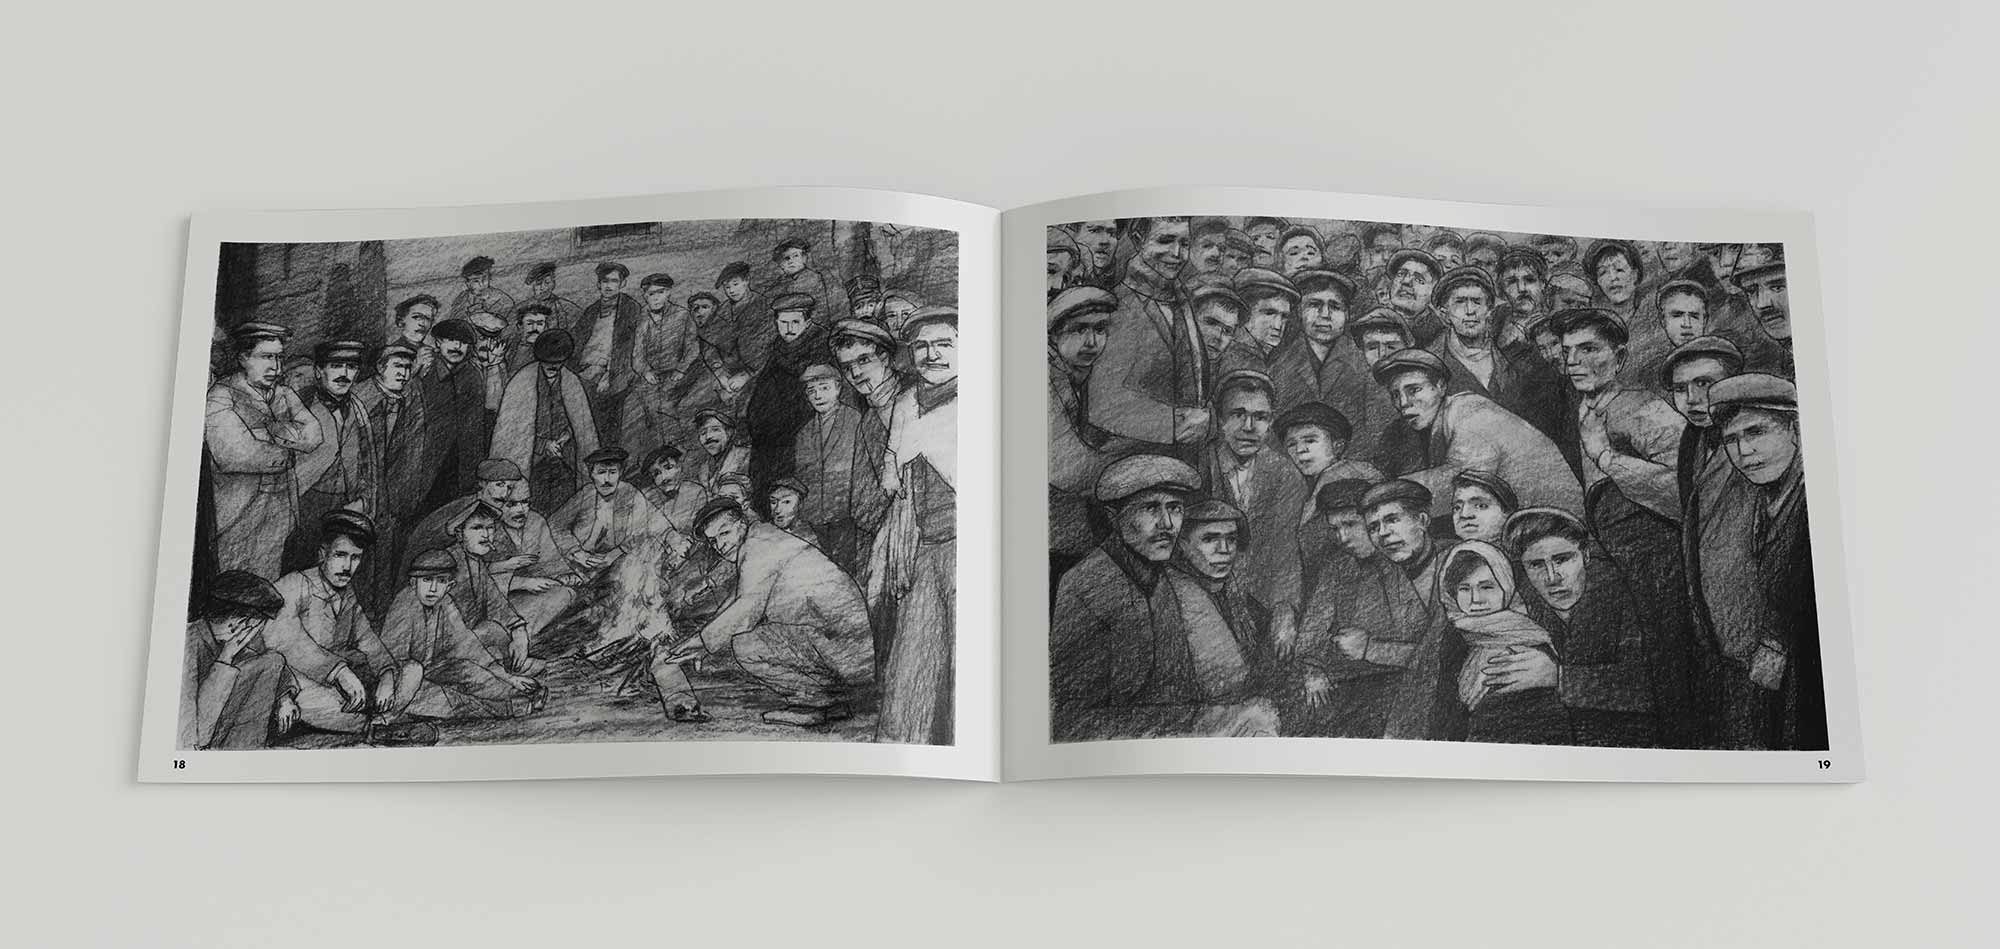 Mario Jodra Artist's Book "Viejo Madrid". Interior. Pages 18-19